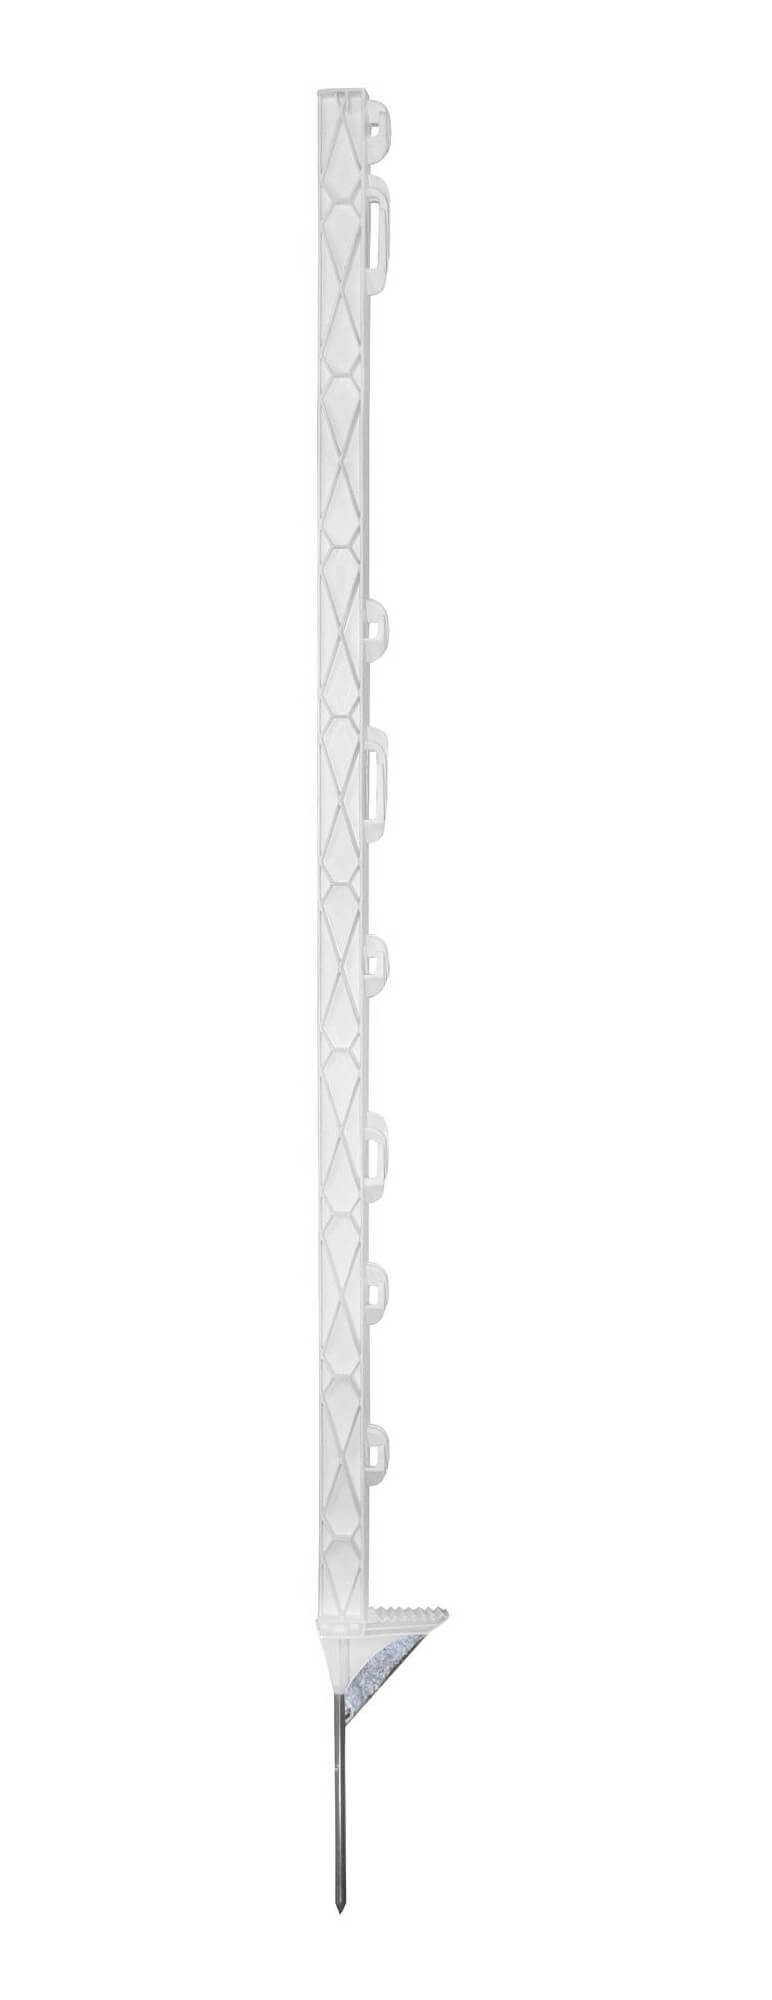 AKO Kunststoffpfahl Titan PLUS 110 cm - mit Trittverstärkung